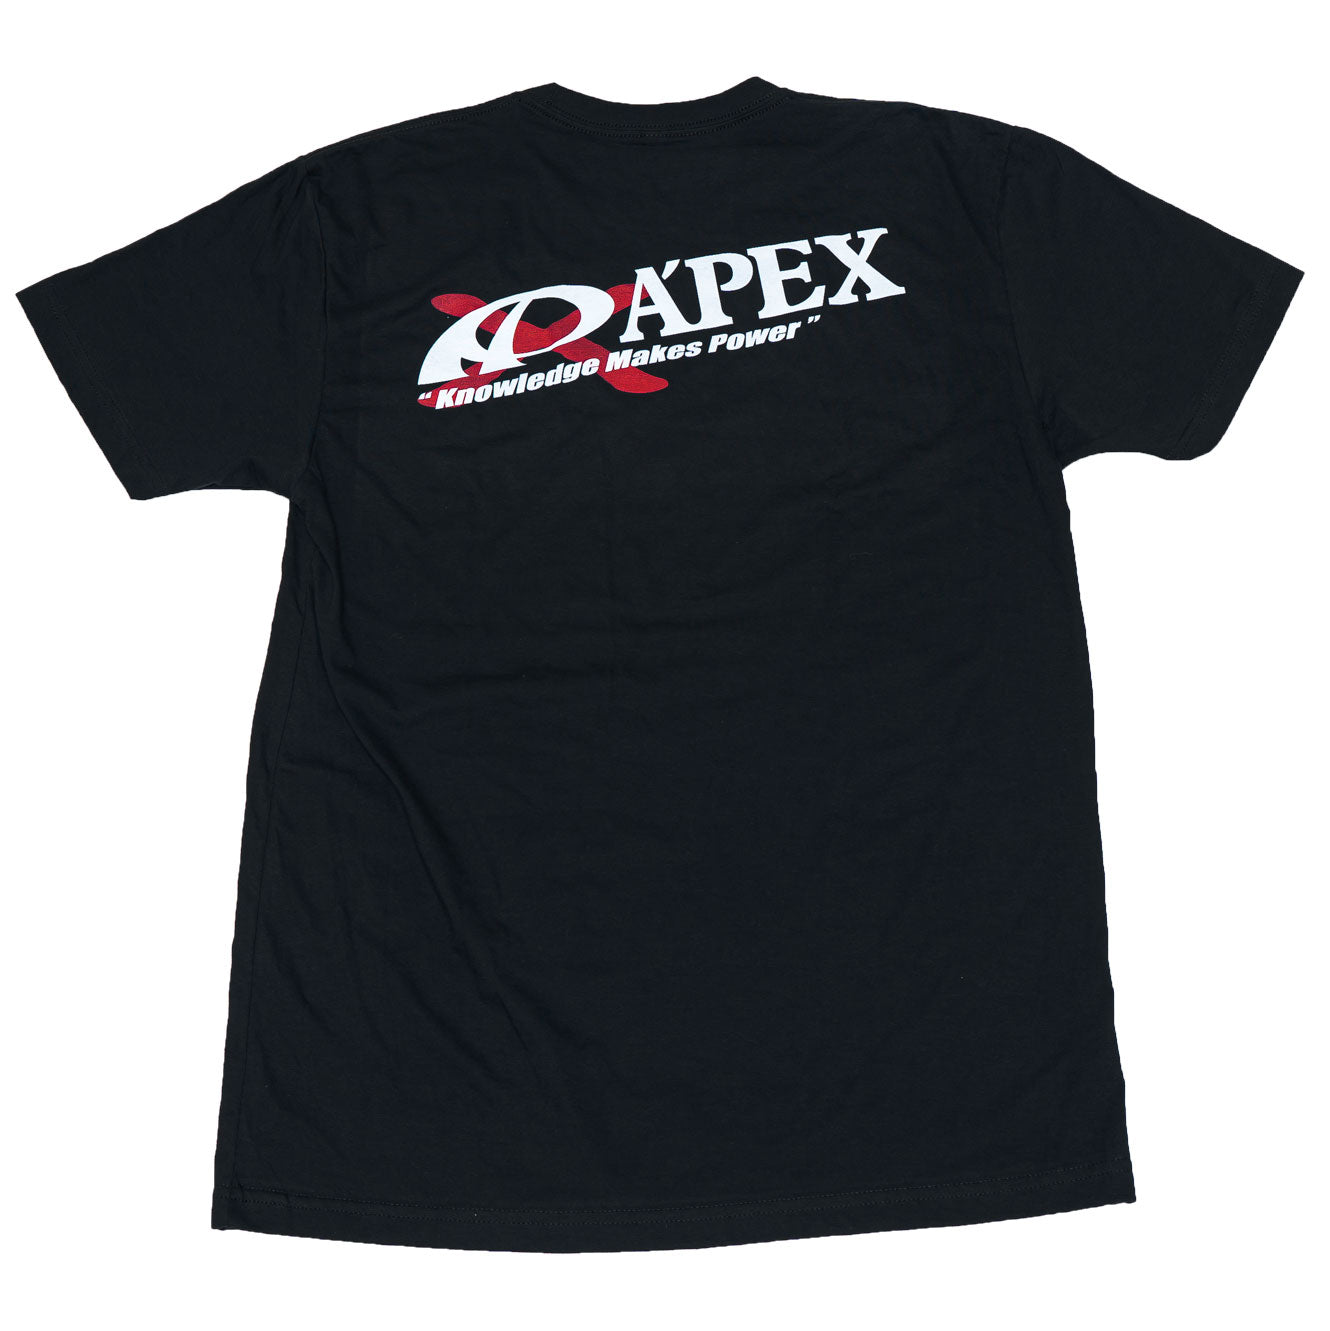 A'PEXi - T-Shirt - APEX-X Circuit Legend - Black